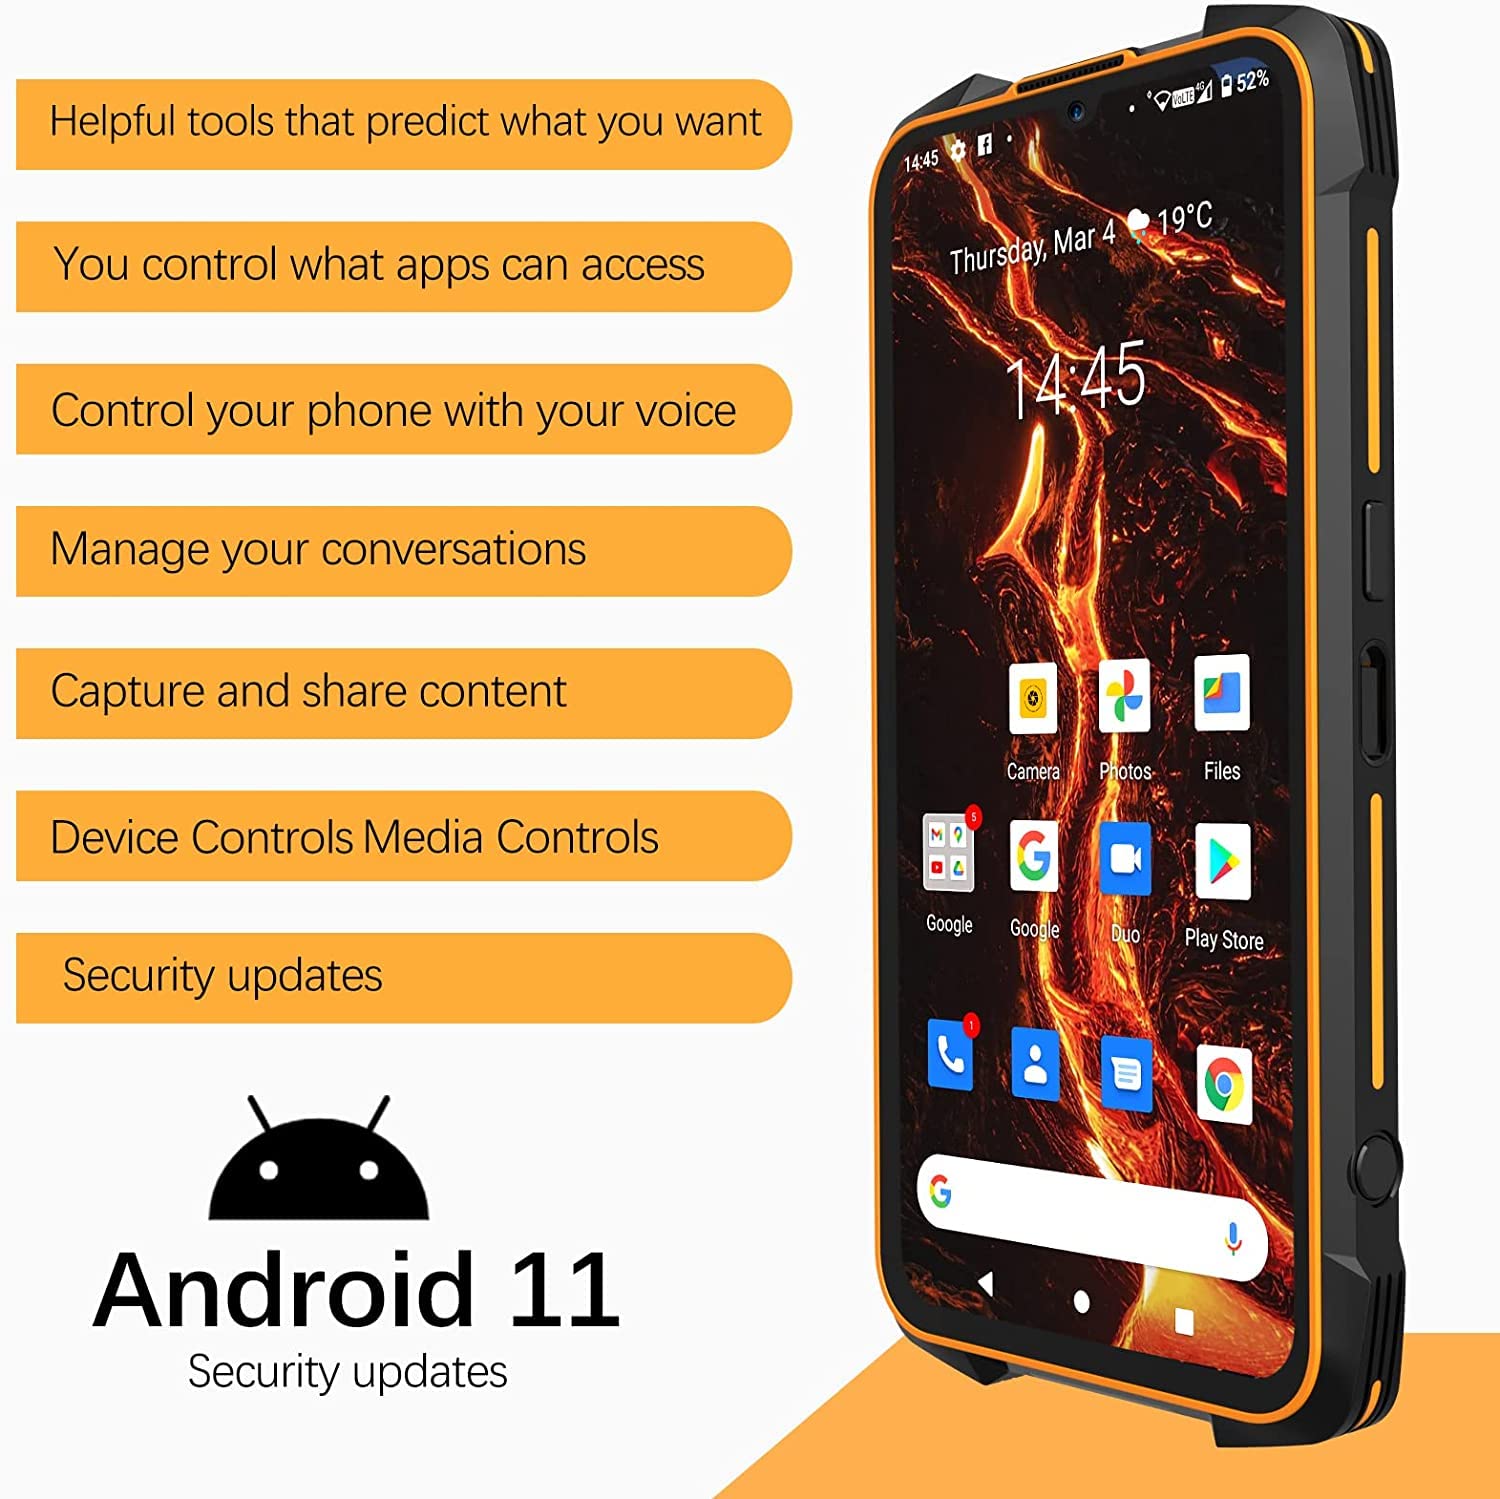 CUBOT Rugged Smartphone Unlocked, Kingkong 5 Pro Outdoor Phone Unlocked with 8000mAh Battery, 48MP Triple Camera, 6.1'' HD Display, 4GB/64 GB (256GB Extension), 4G Dual SIM, US Version (Black+Orange)